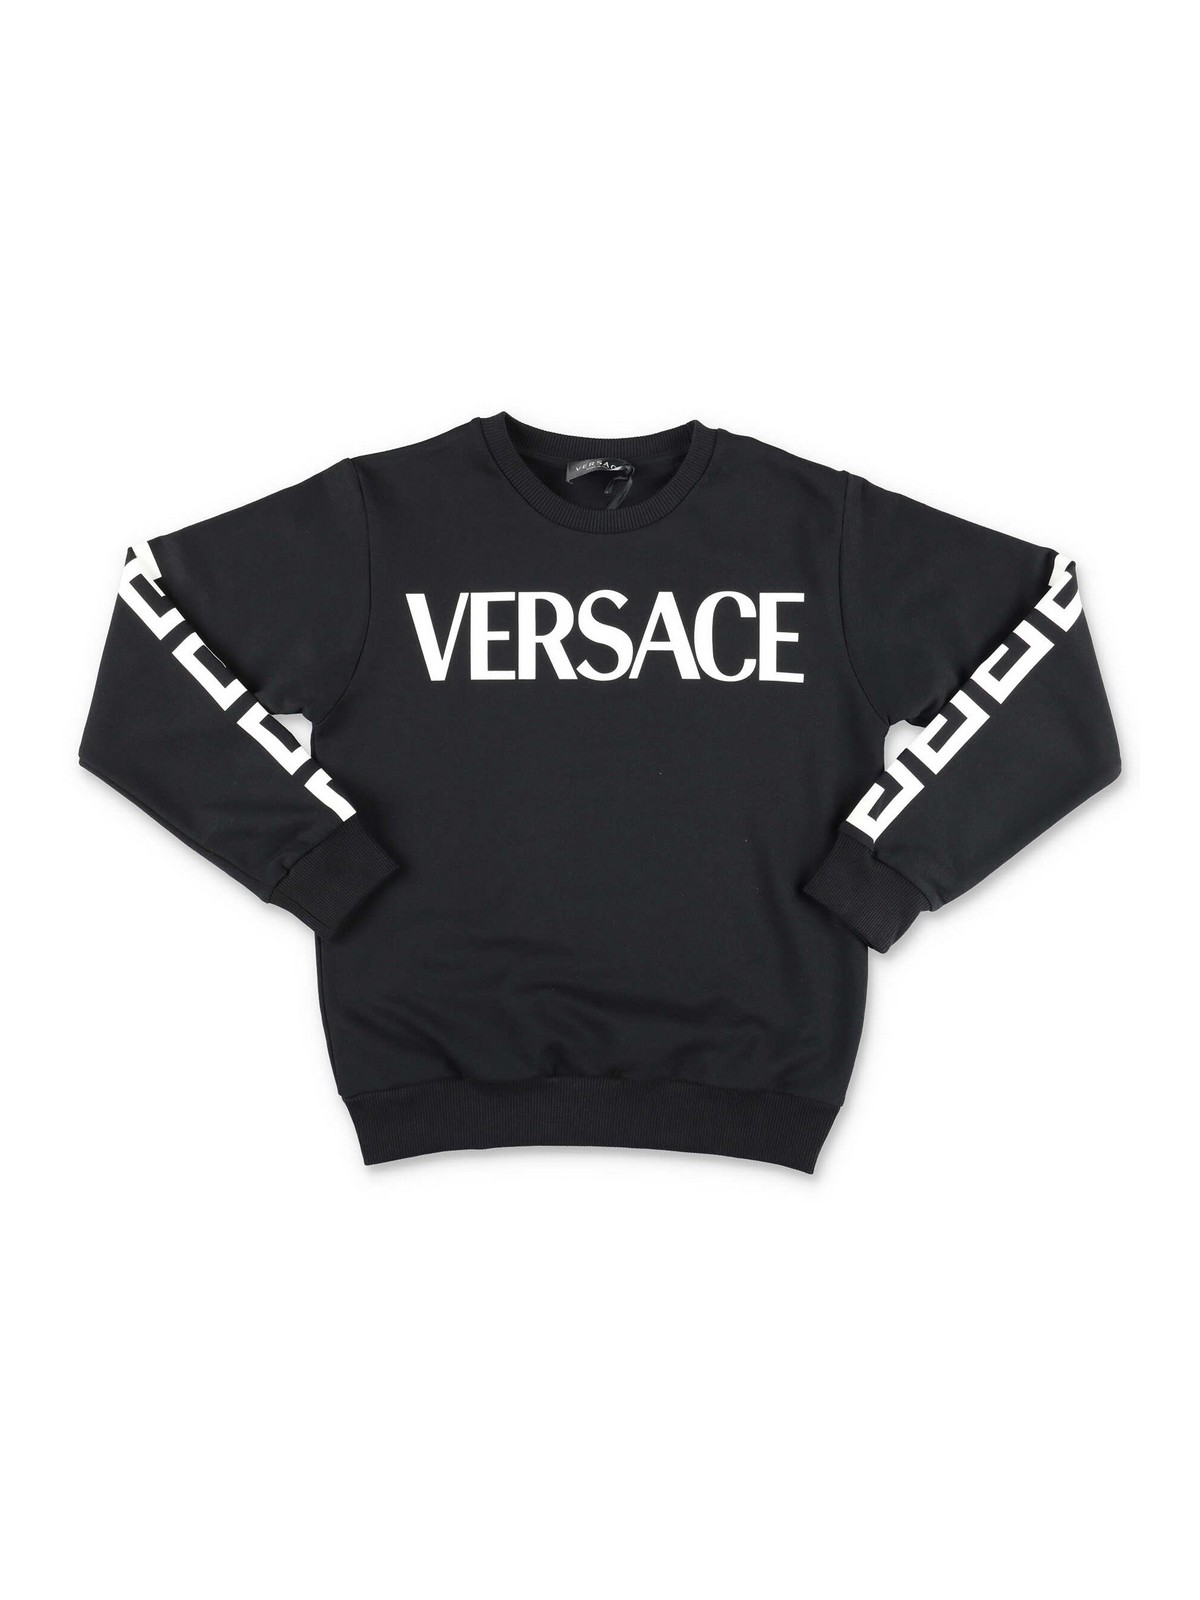 Versace Kids' Black Cotton Sweatshirt